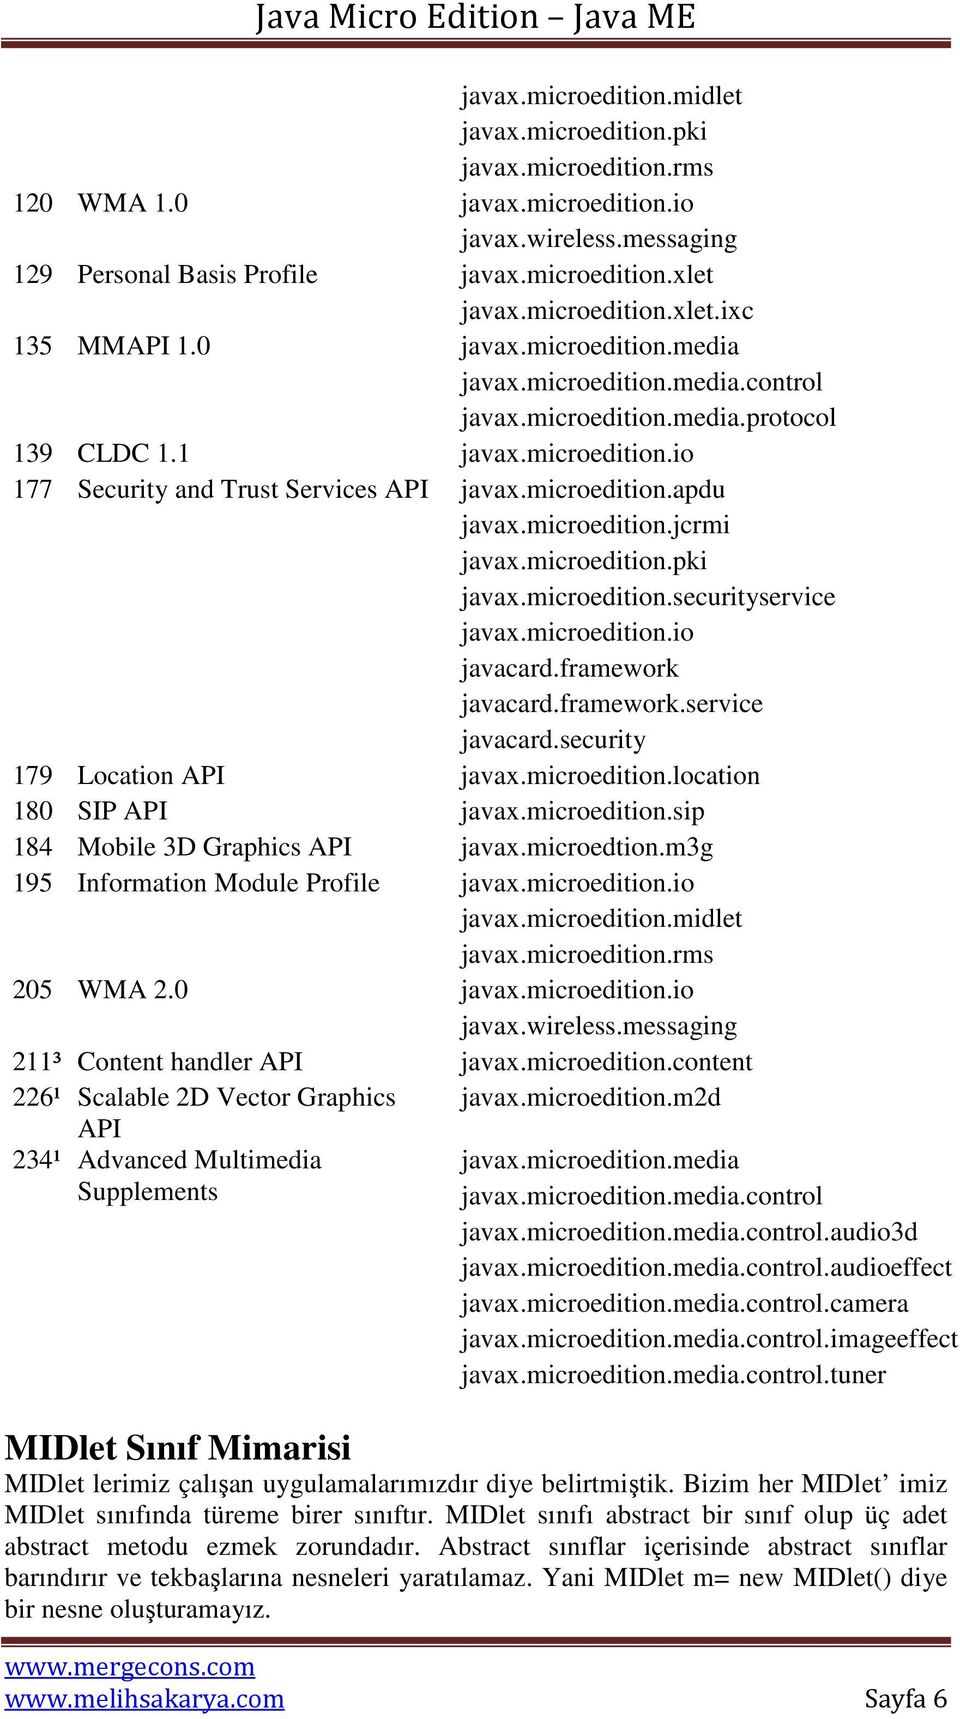 microedition.securityservice javax.microedition.io javacard.framework javacard.framework.service javacard.security 179 Location API javax.microedition.location 180 SIP API javax.microedition.sip 184 Mobile 3D Graphics API javax.